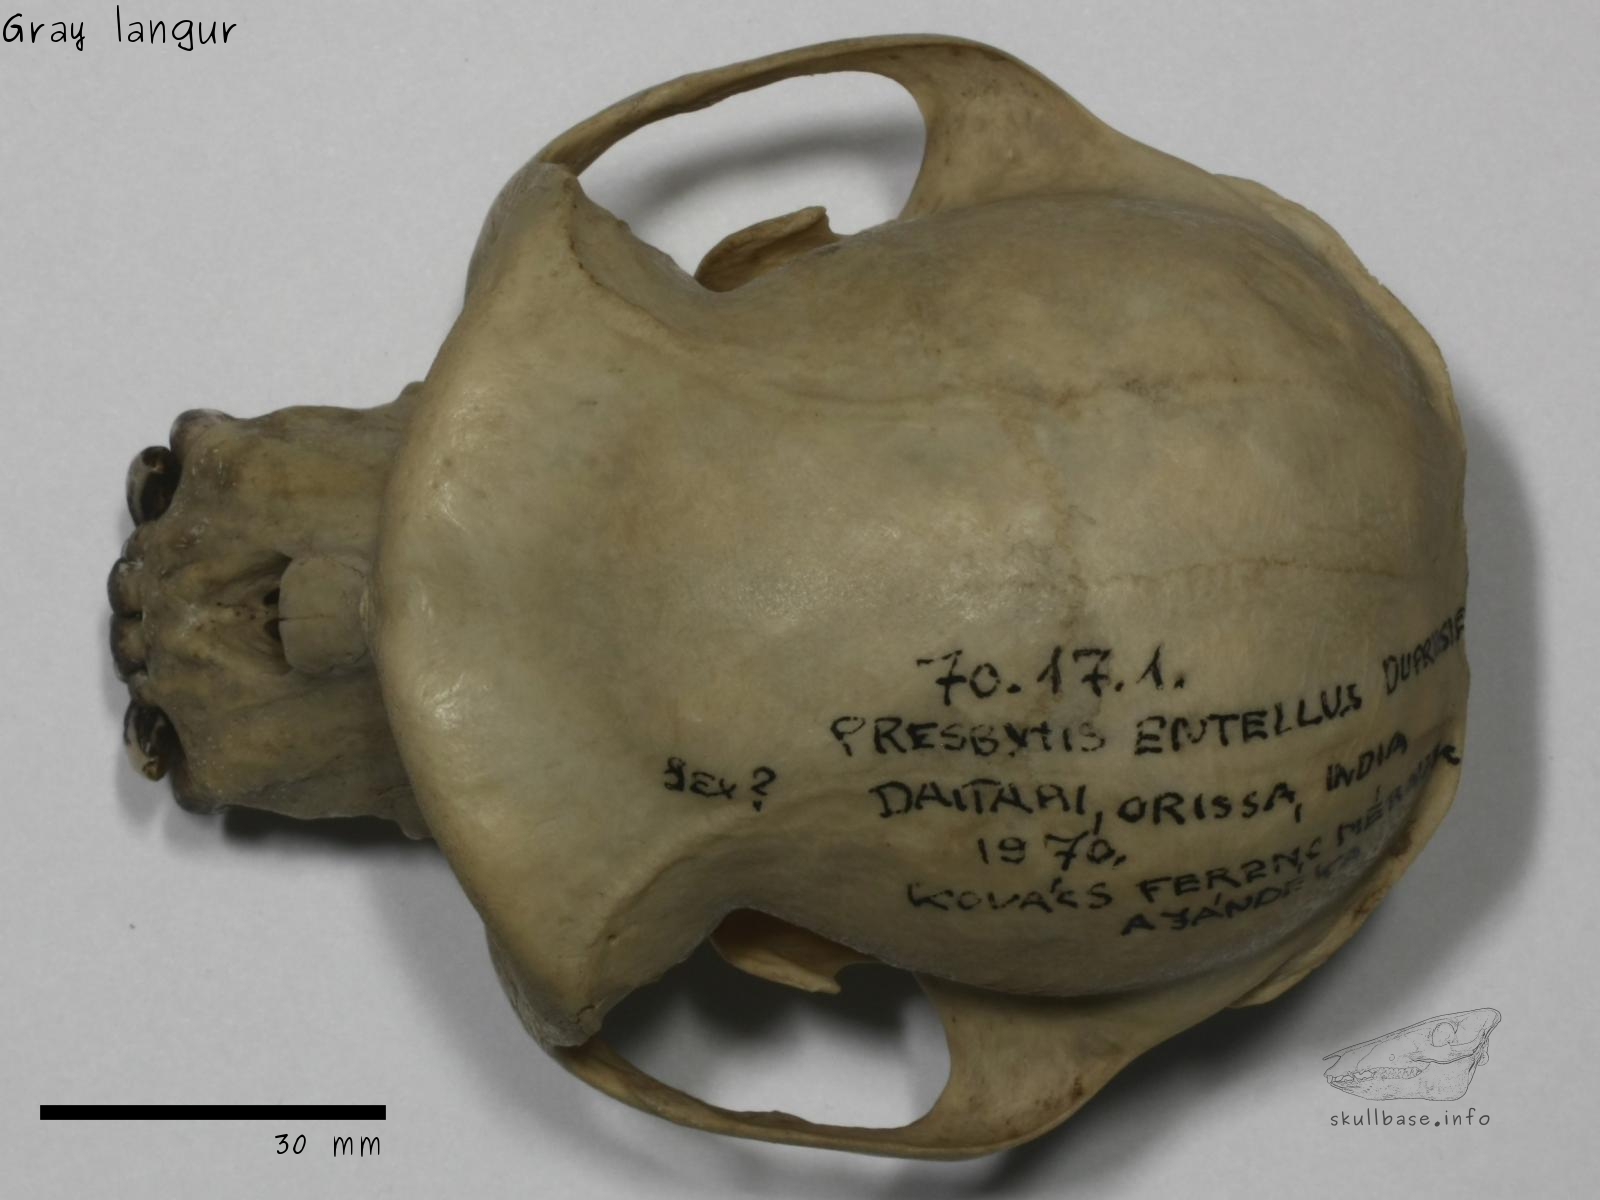 Gray langur (Semnopithecus entellus) skull dorsal view